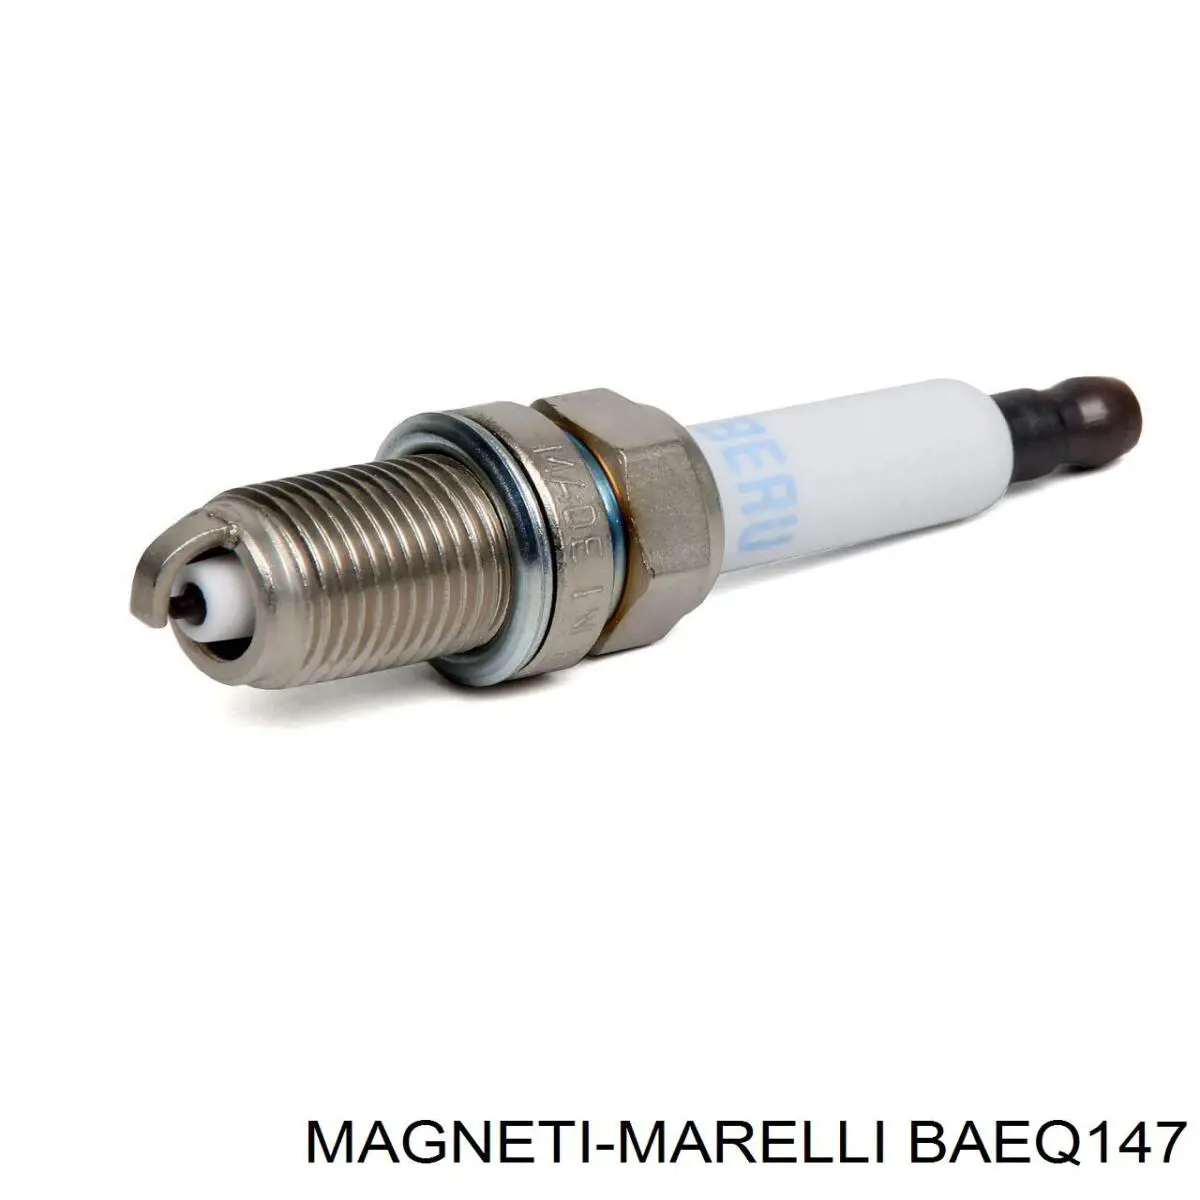 BAEQ147 Magneti Marelli bobina